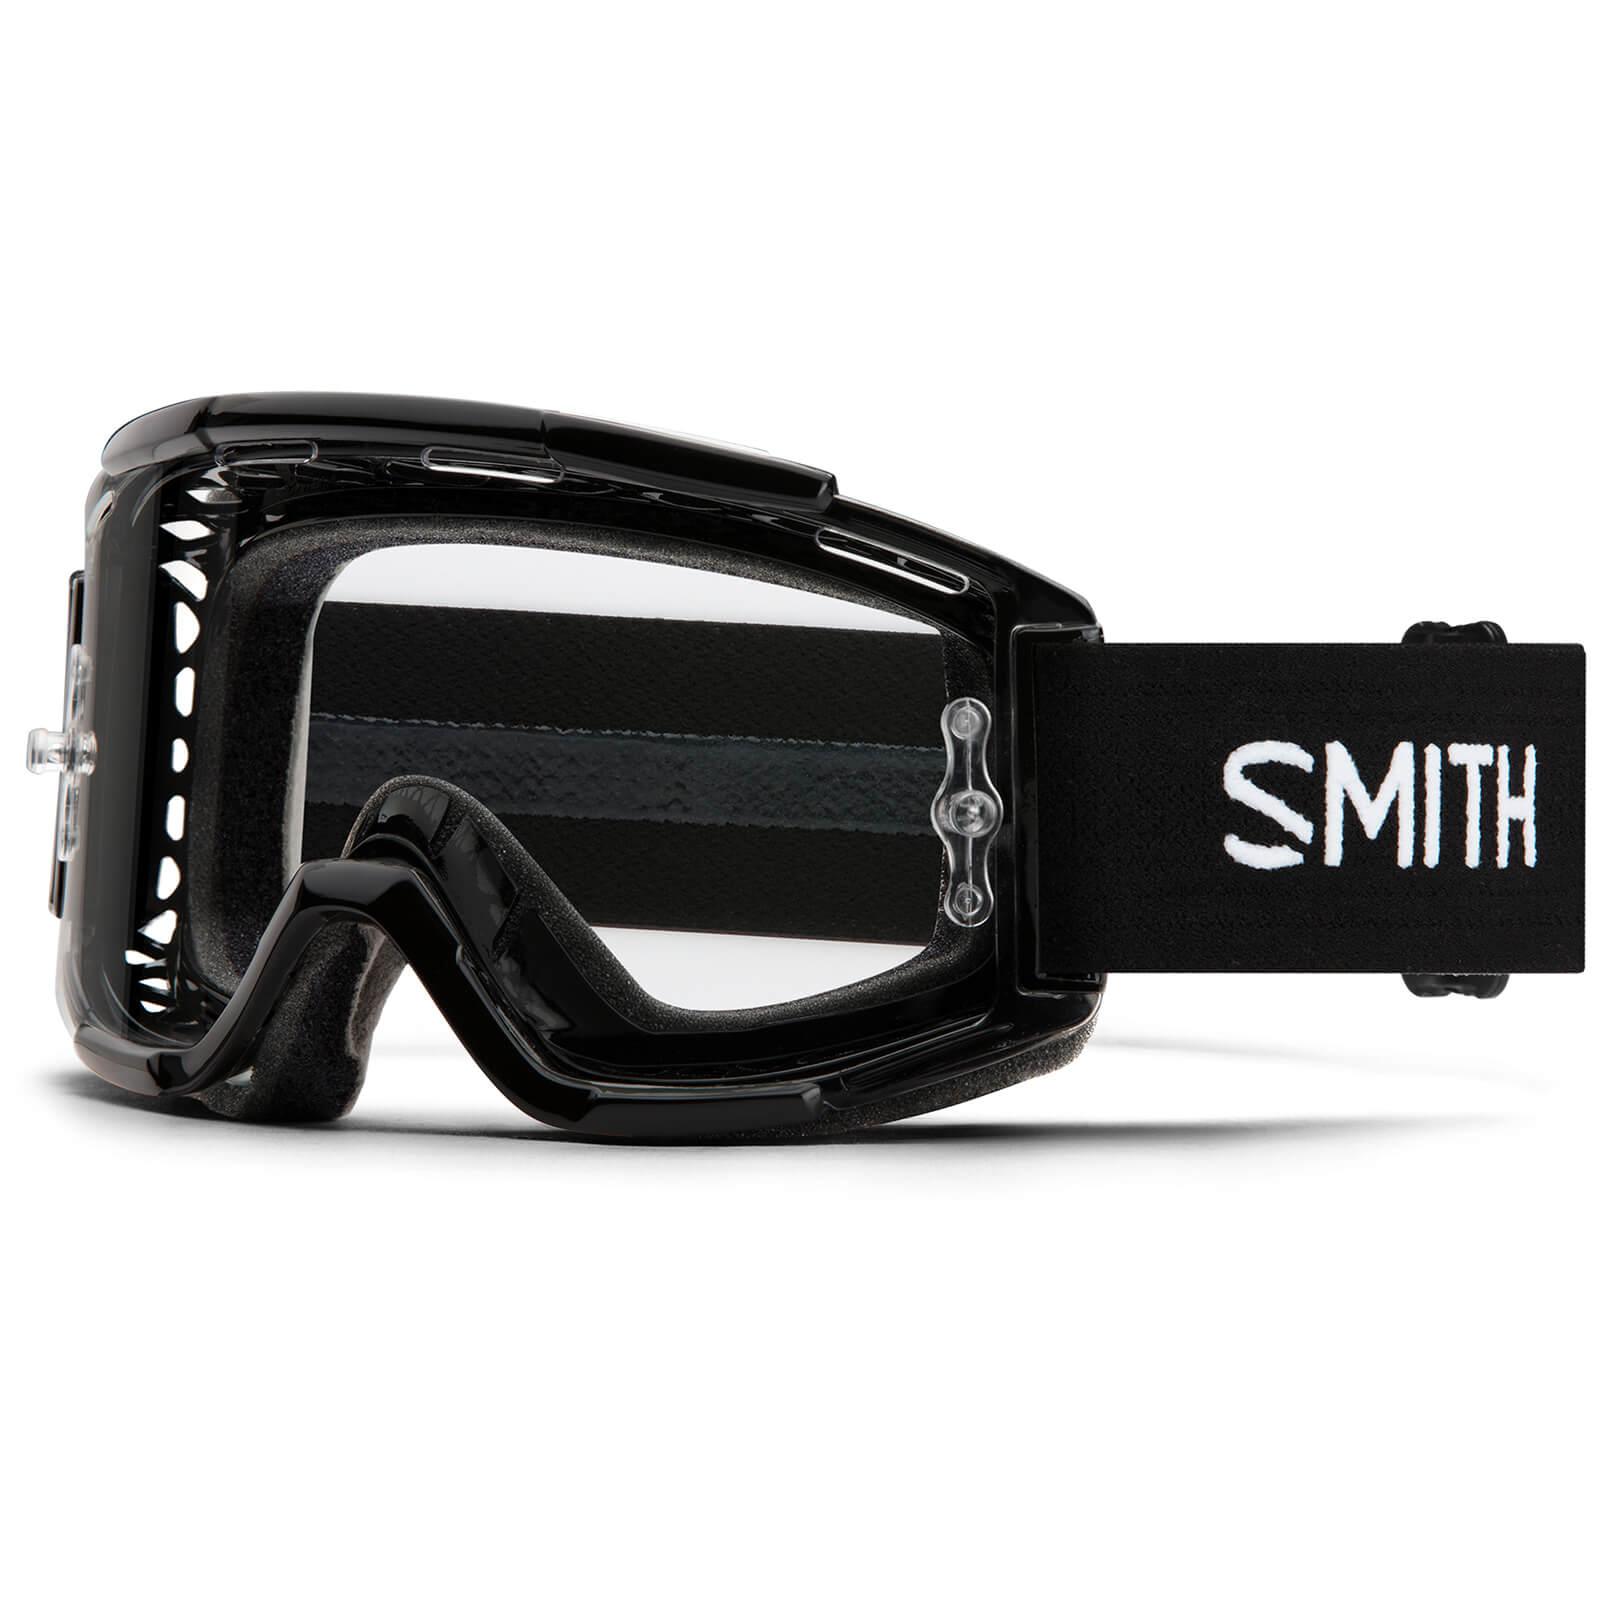 Smith Squad MTB Goggles - Clear Lens - Black